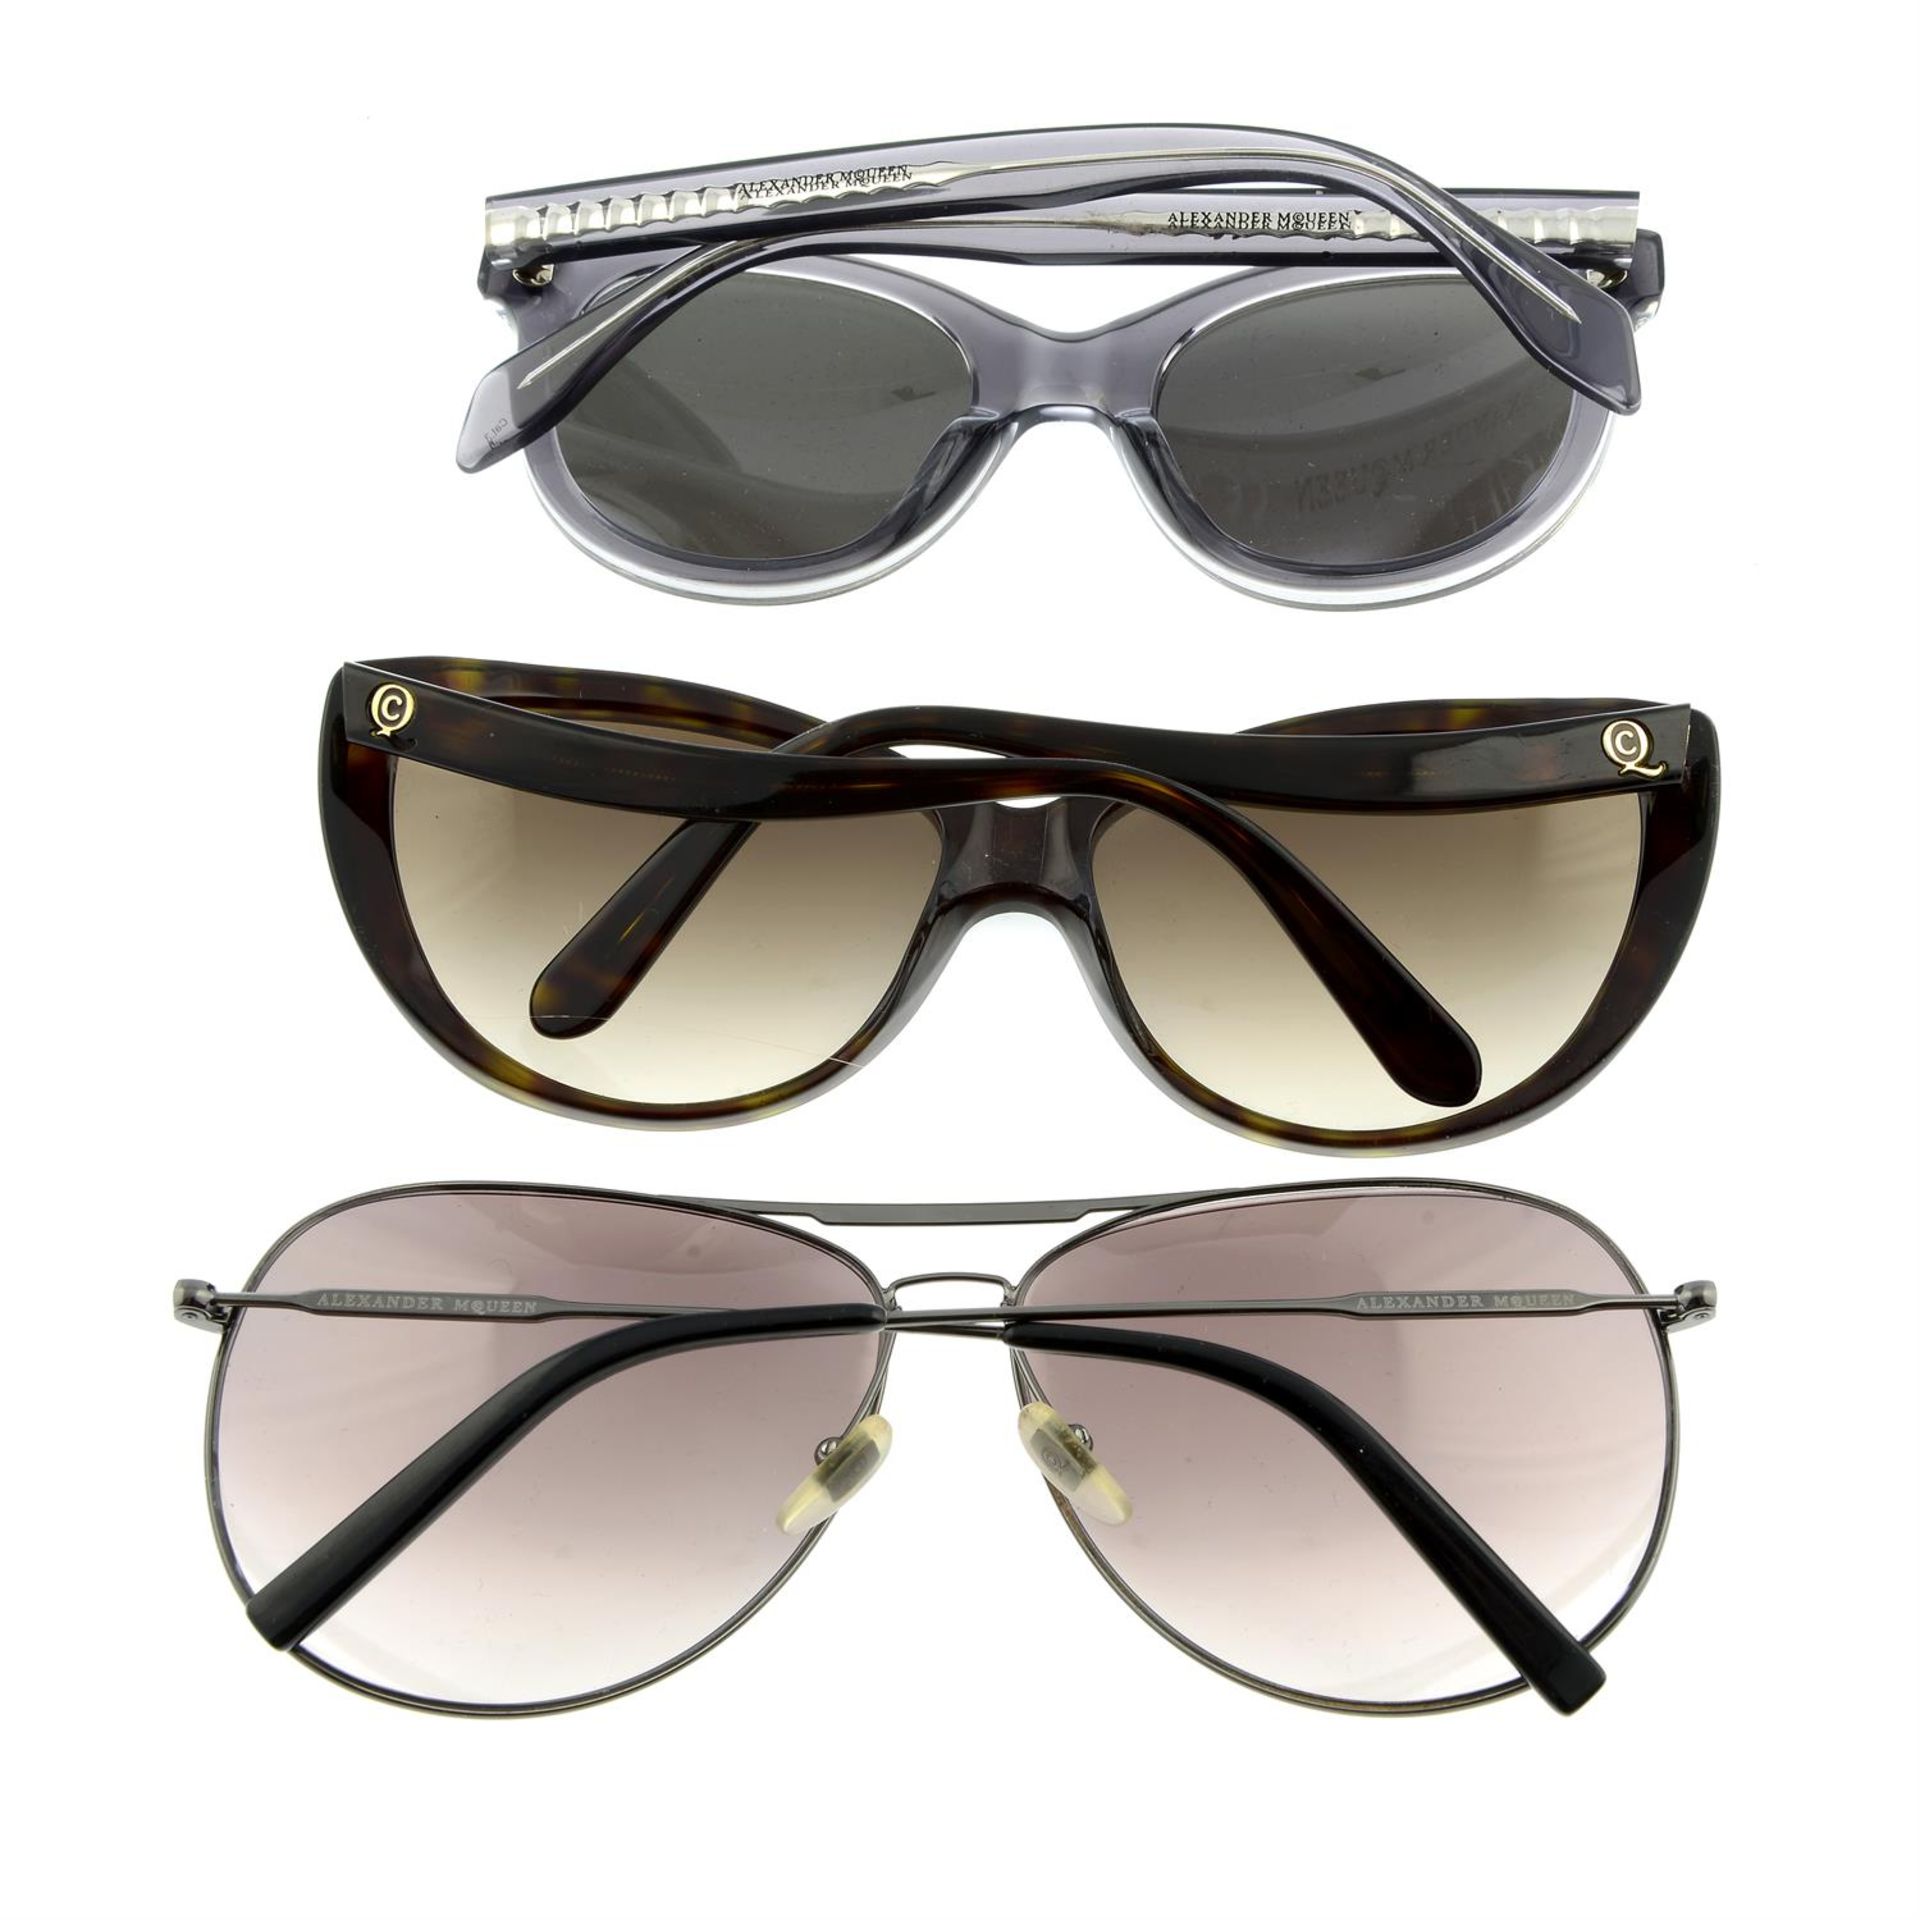 ALEXANDER MCQUEEN - three pairs of sunglasses. - Image 2 of 3